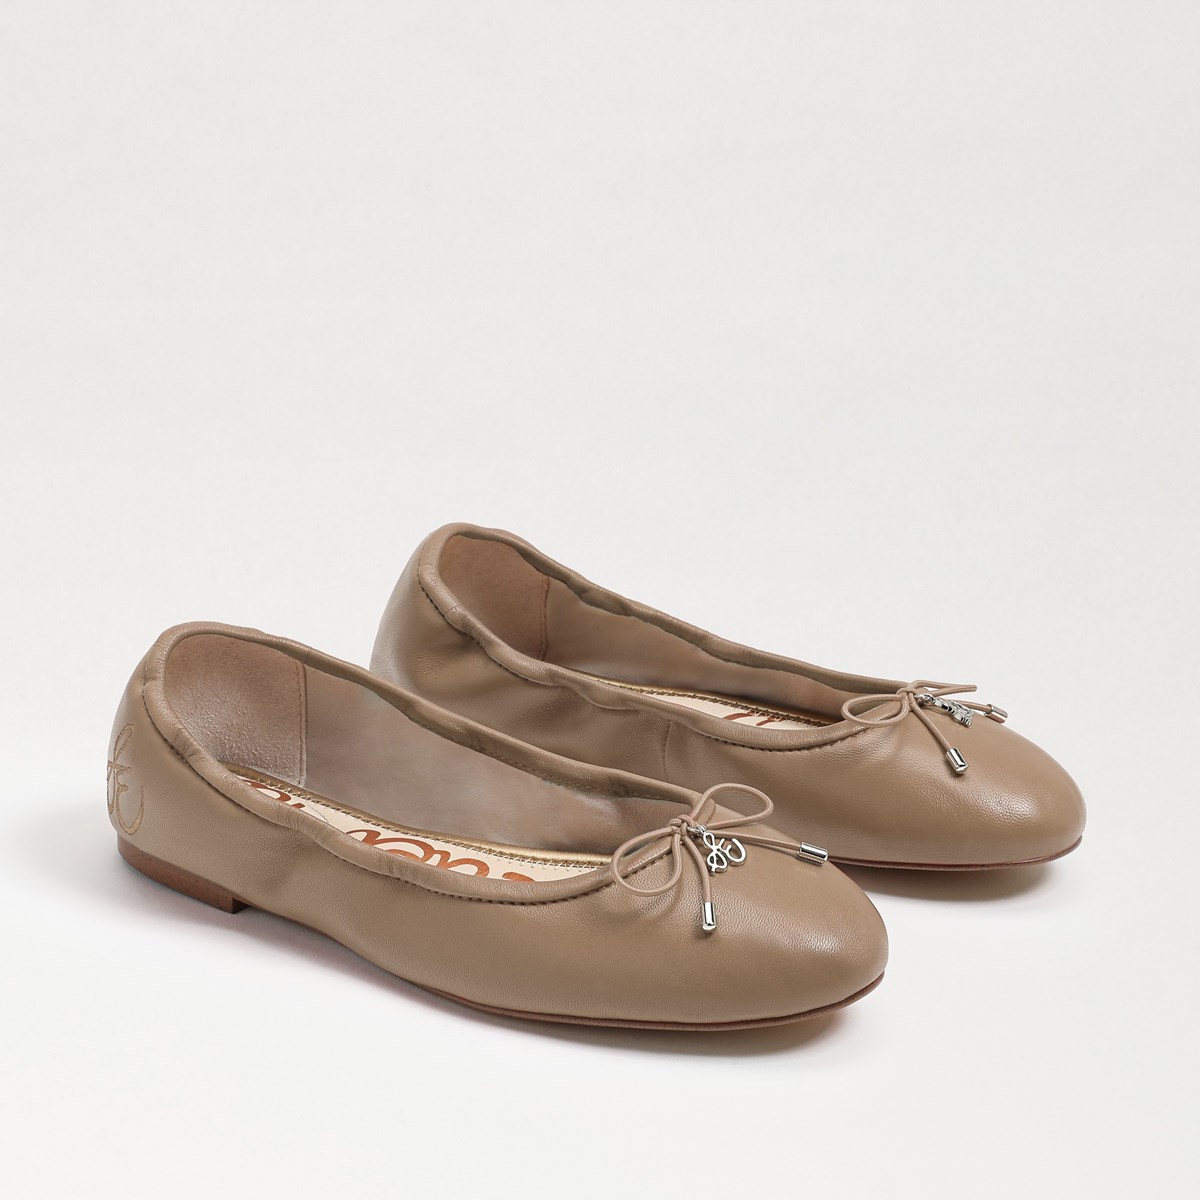 Sam Edelman Felicia Ballet Flat | Women's Flats and Loafers